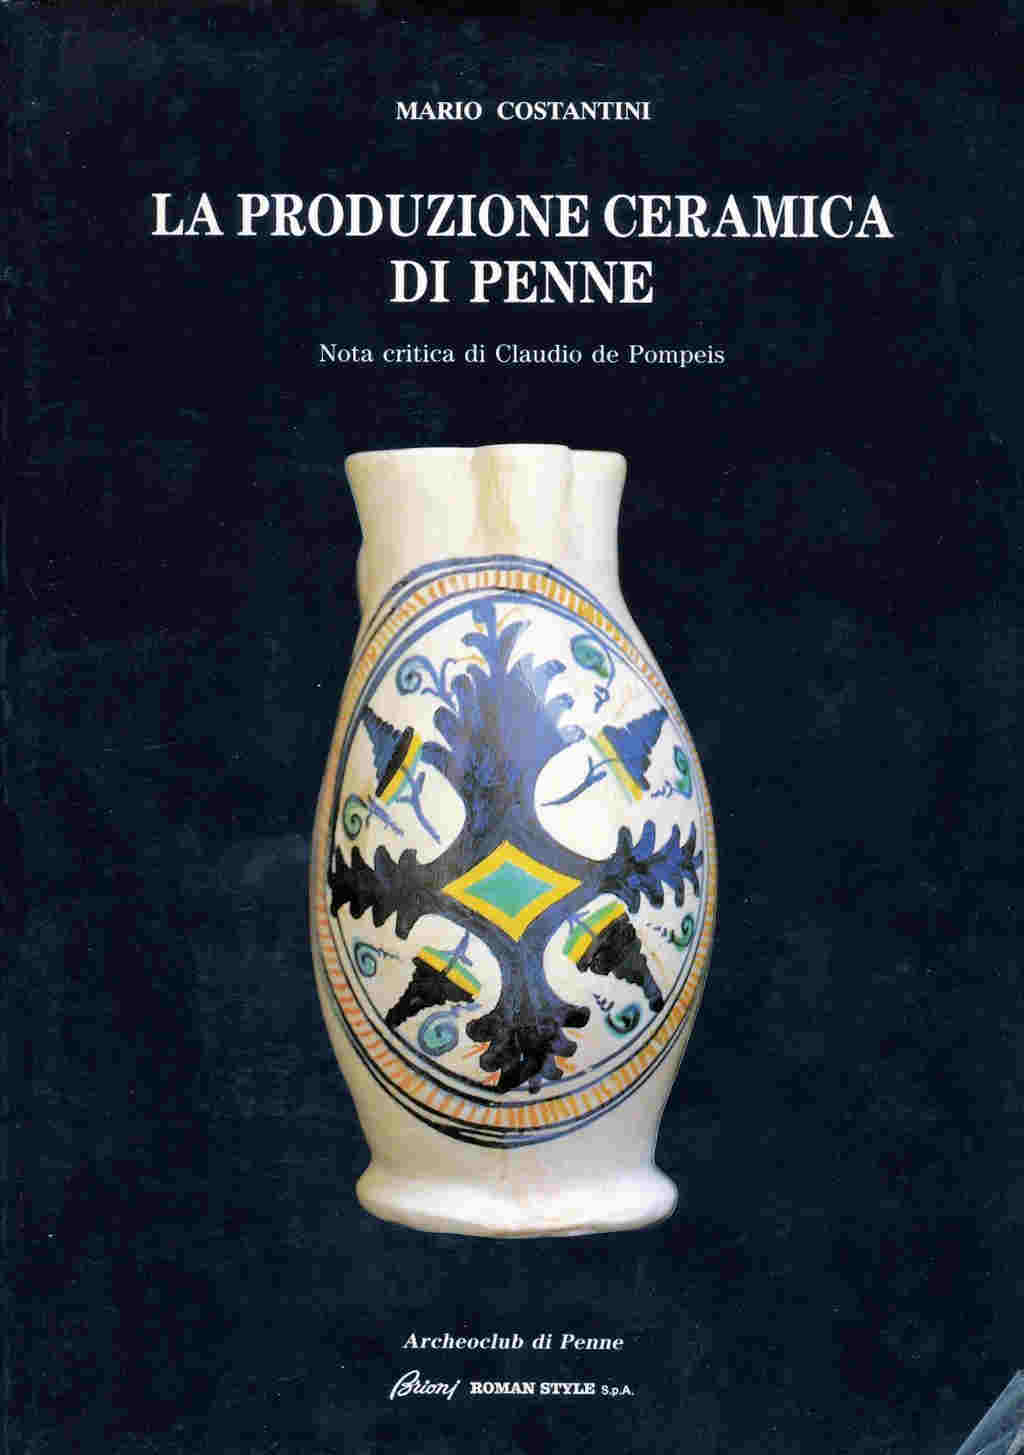 1989 - La produzione ceramica di Penne